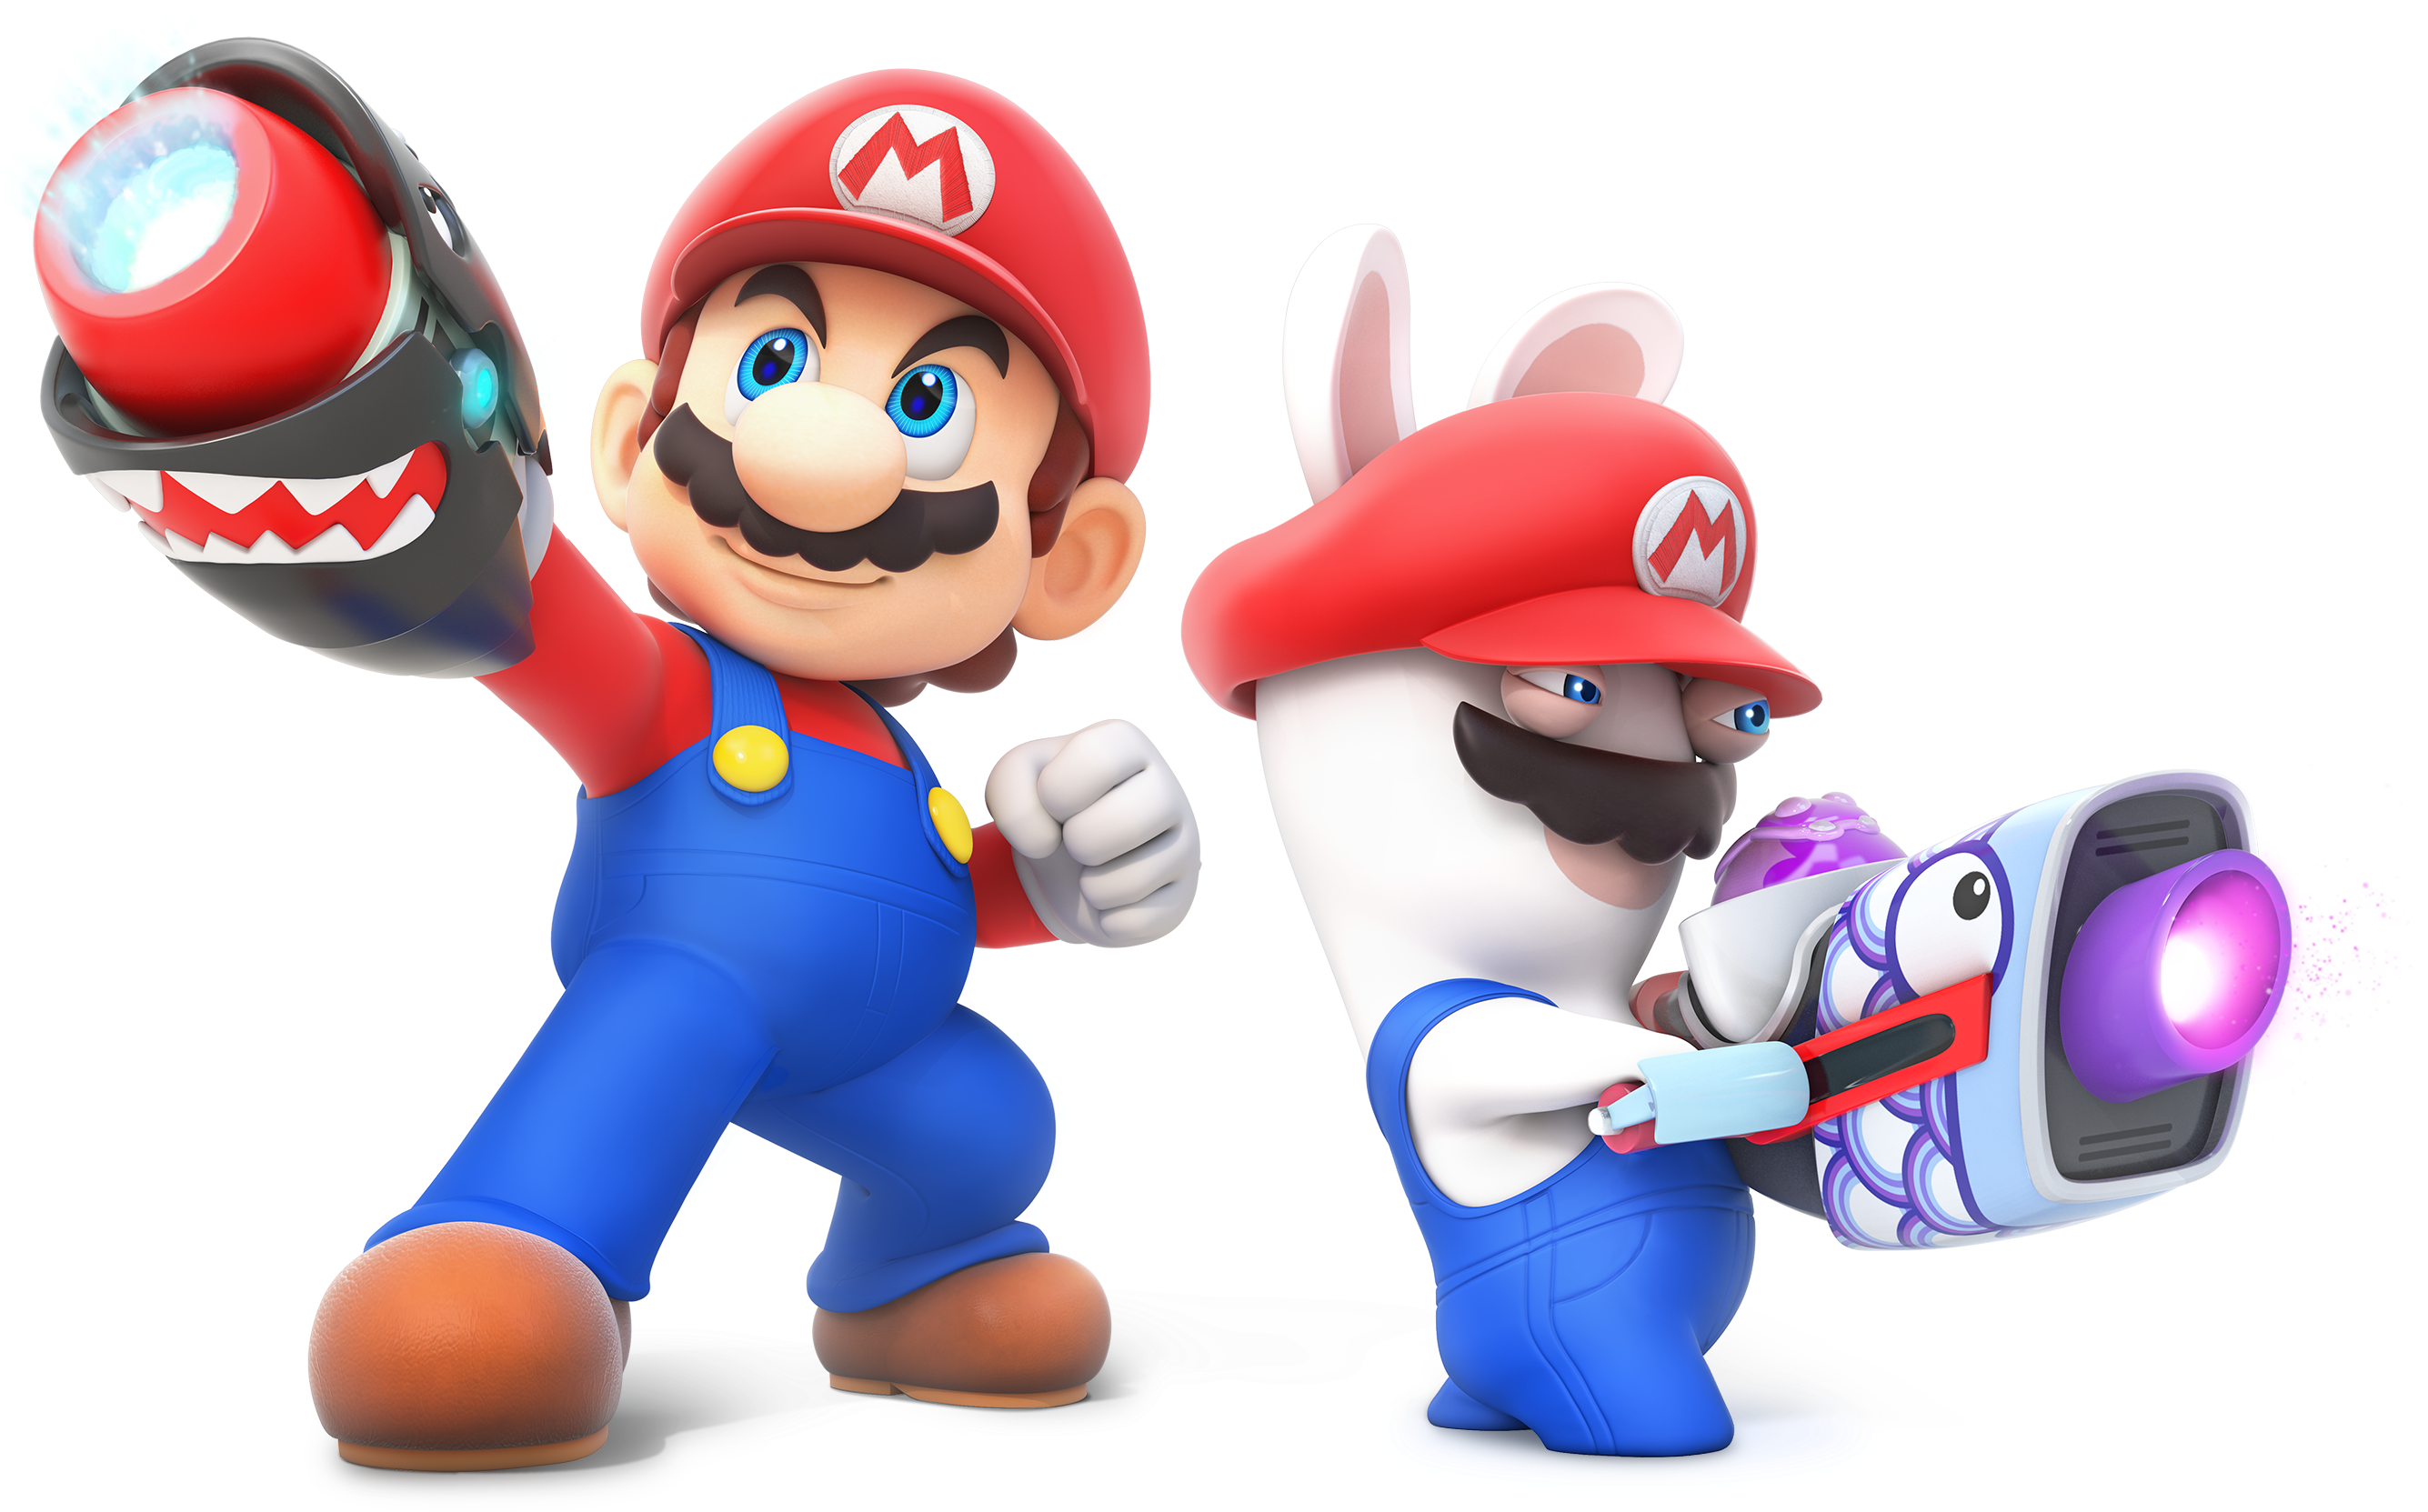 Mario Rabbids Nintendo Switch. Mario Rabbids Kingdom Battle Nintendo Switch. Кролик Марио Нинтендо. Марио и кролики Нинтендо свитч. Mario bros nintendo switch